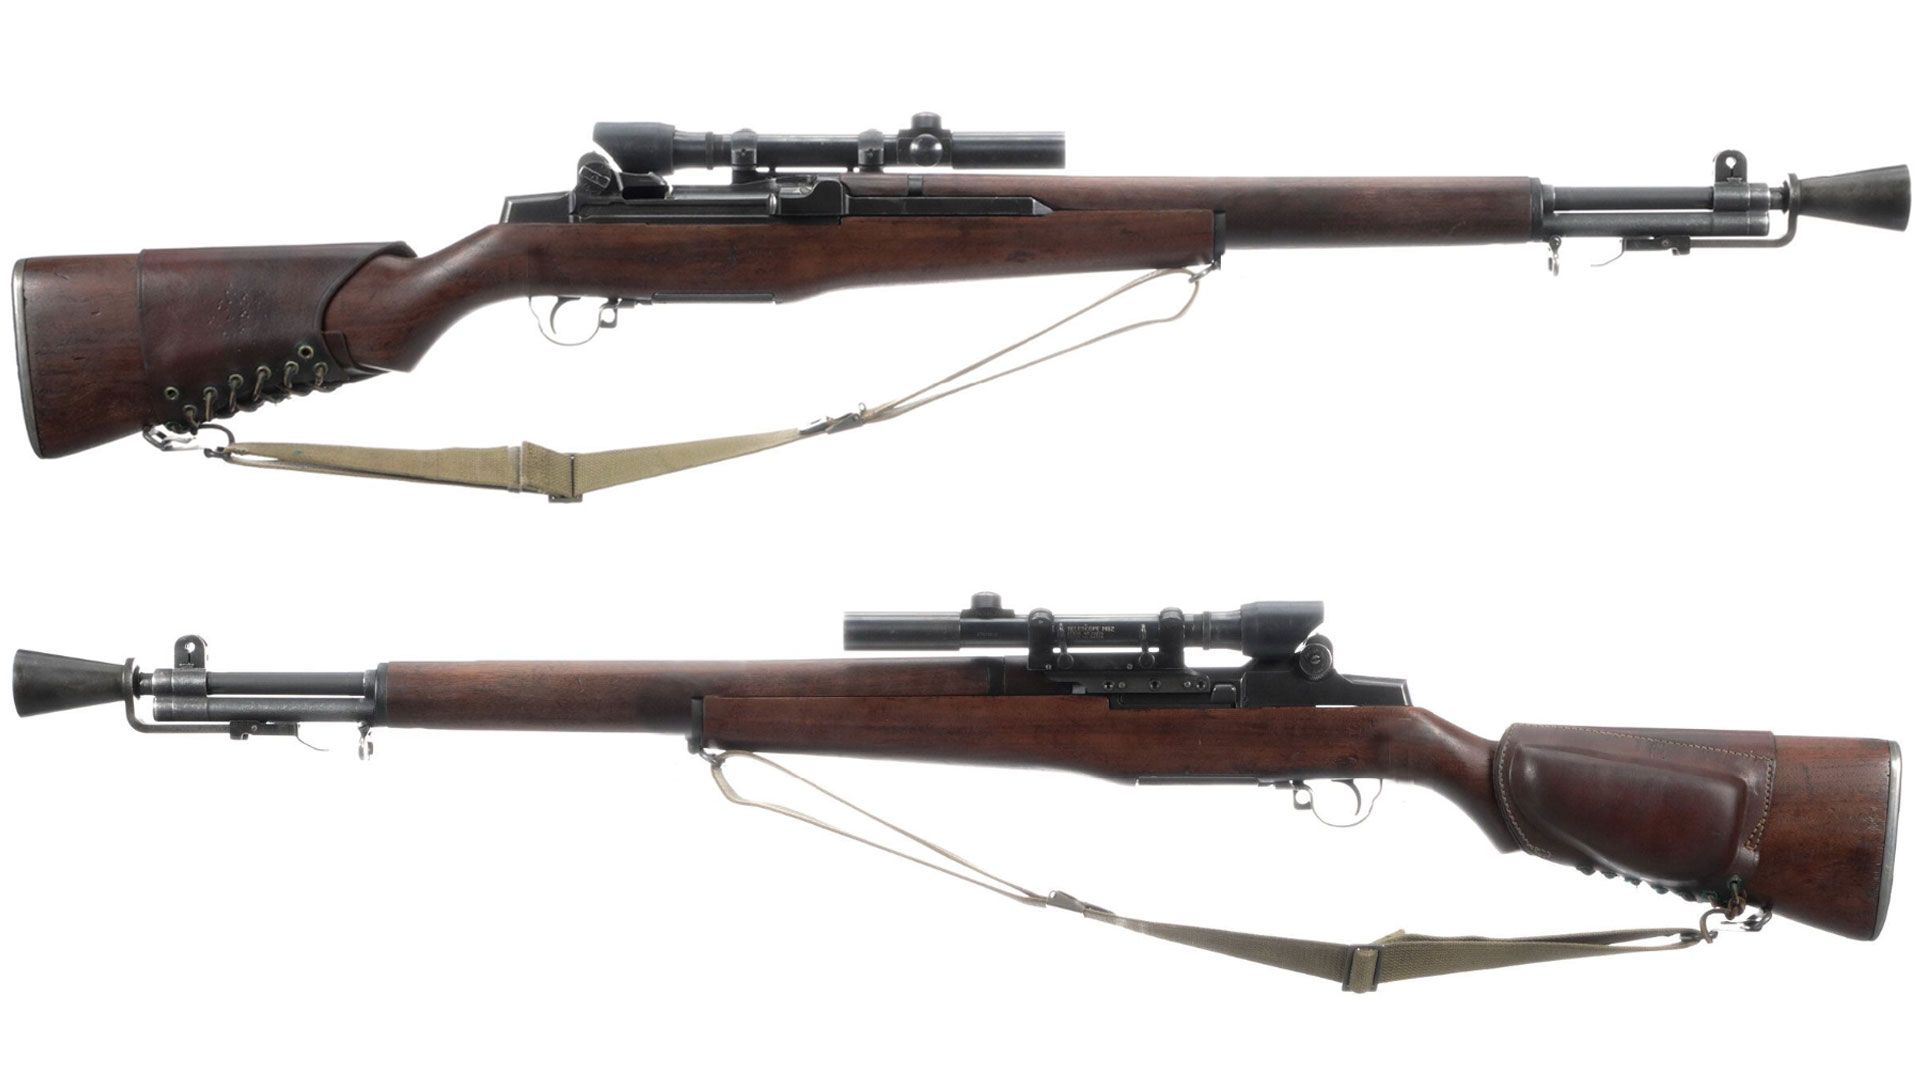 The m1 Garand rifle makes an excellent gun gift